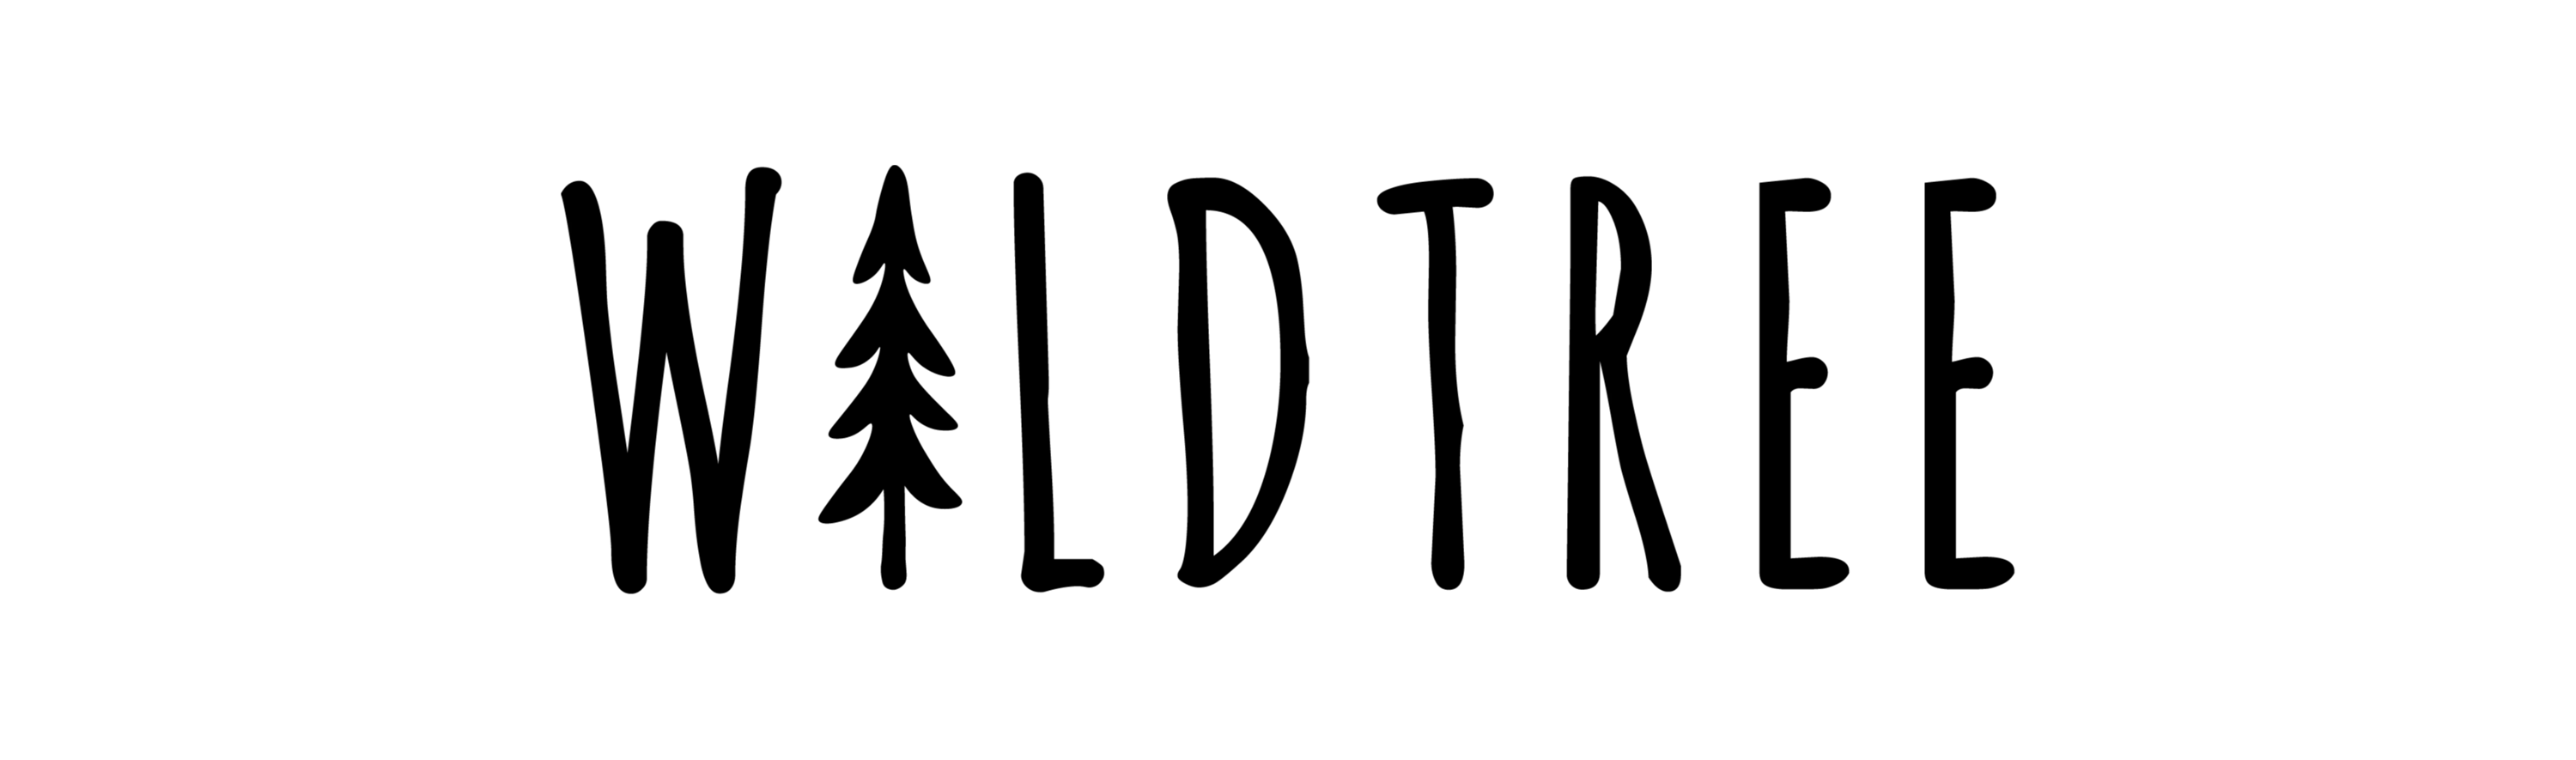 Wildtree logo.